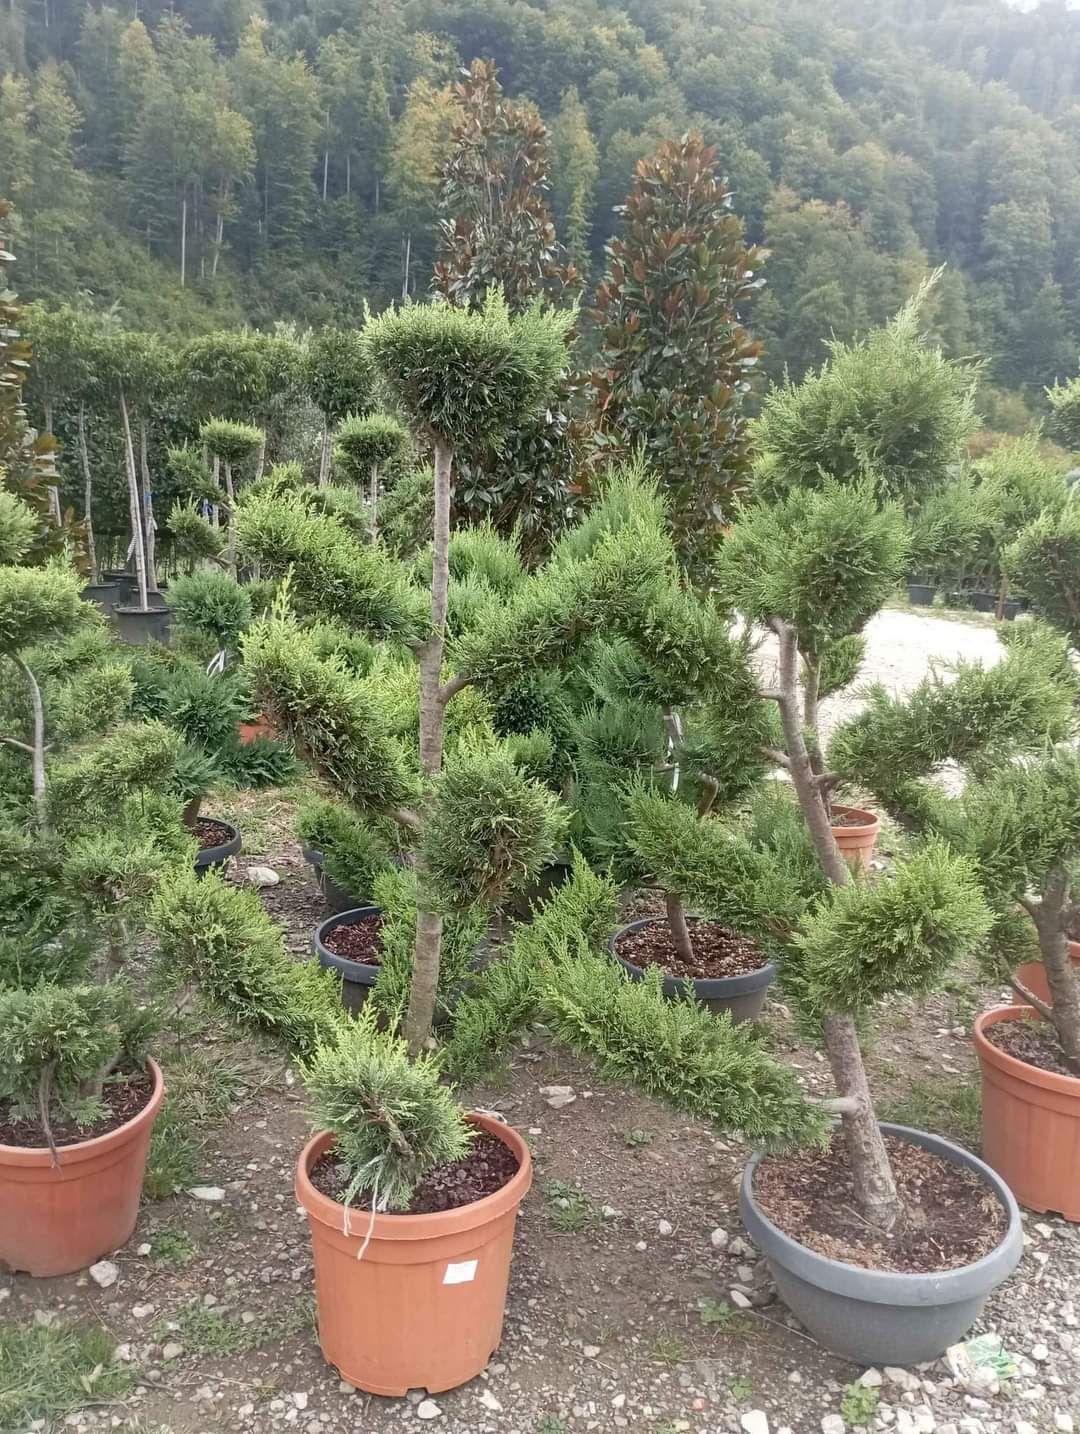 Direct distribuitor plante ornamentale cu experientã in domeniu oferim